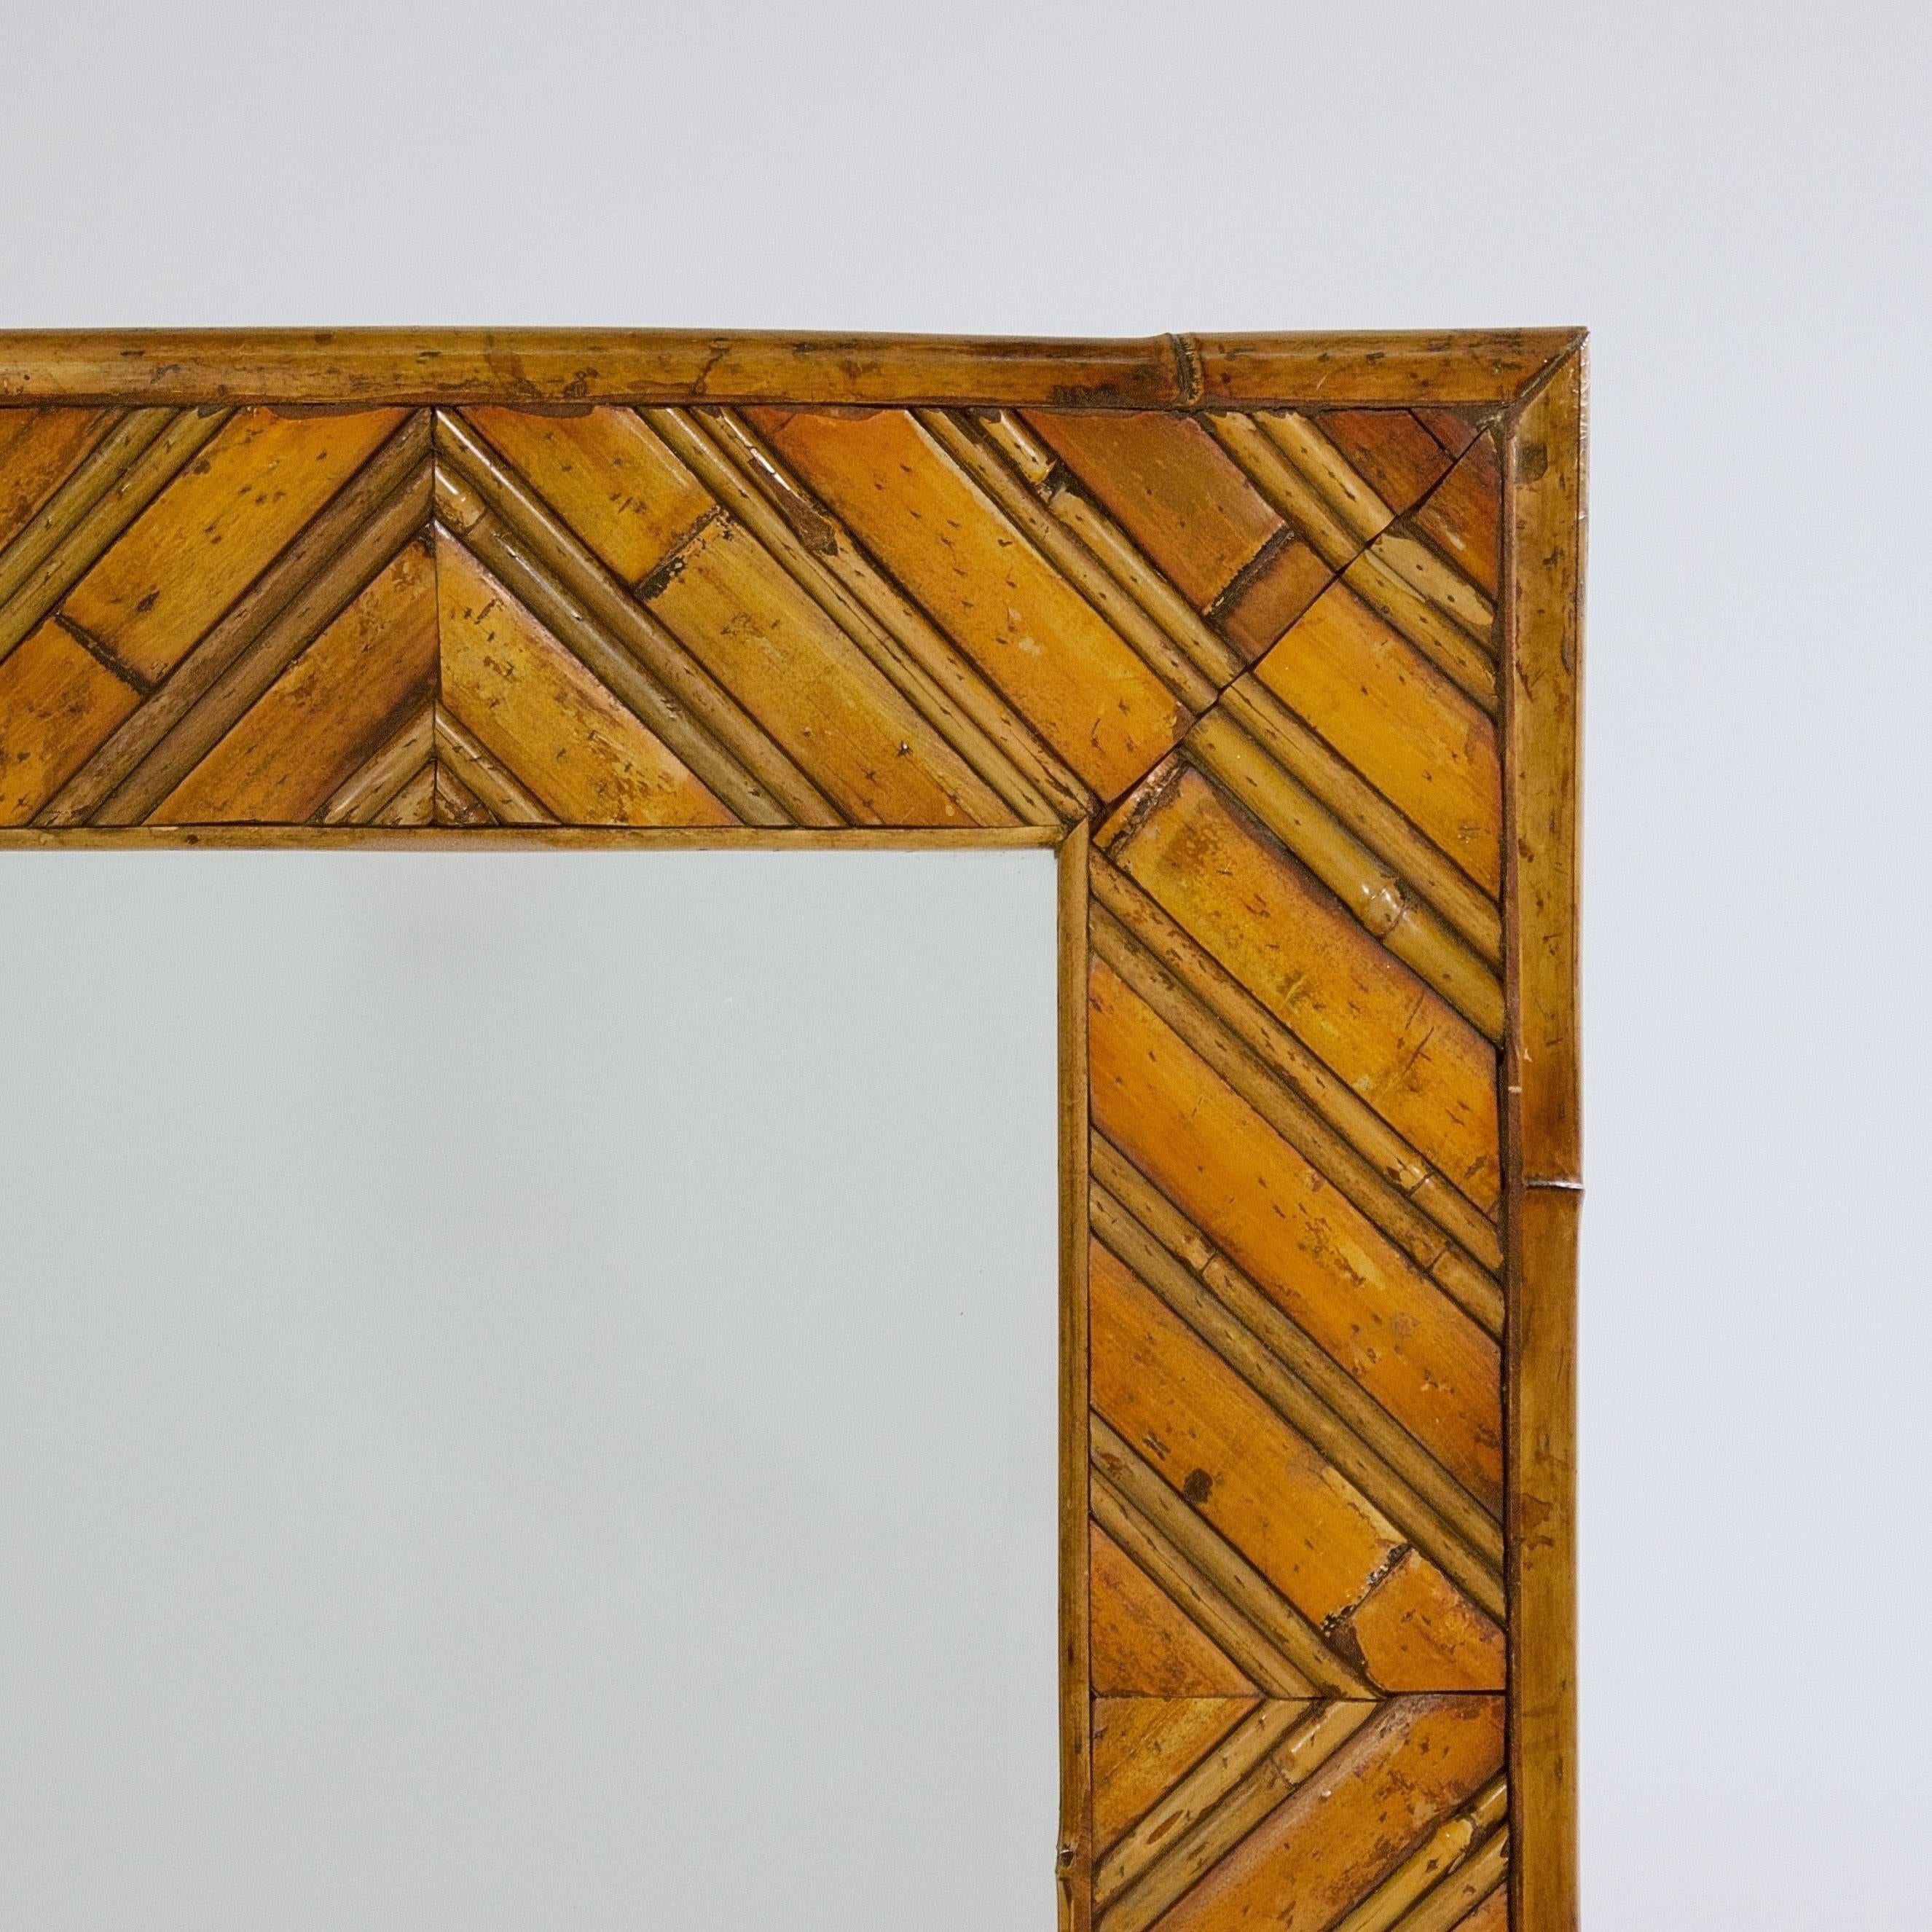 Organic Modern Rectangular Bamboo and Cane Work Mirror